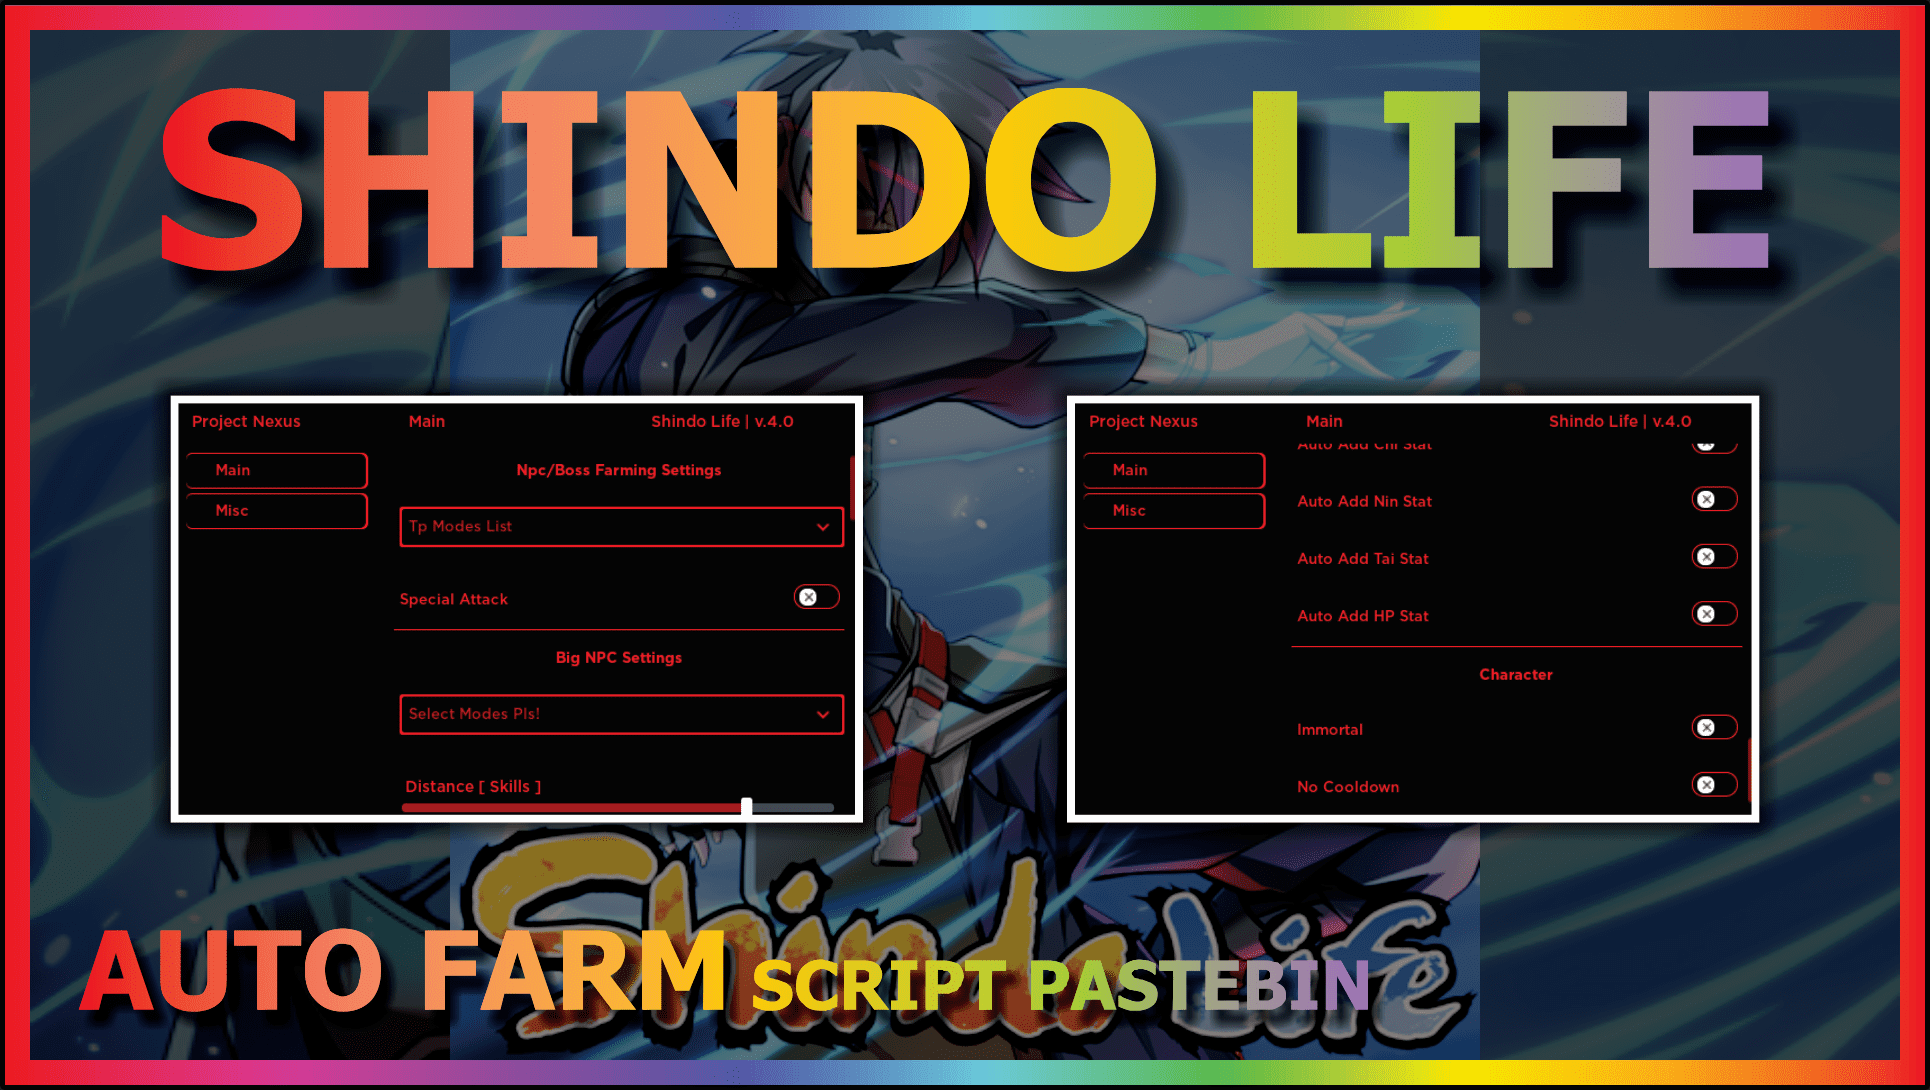 Shindo life script. Как включить автокликер в Шиндо лайф.